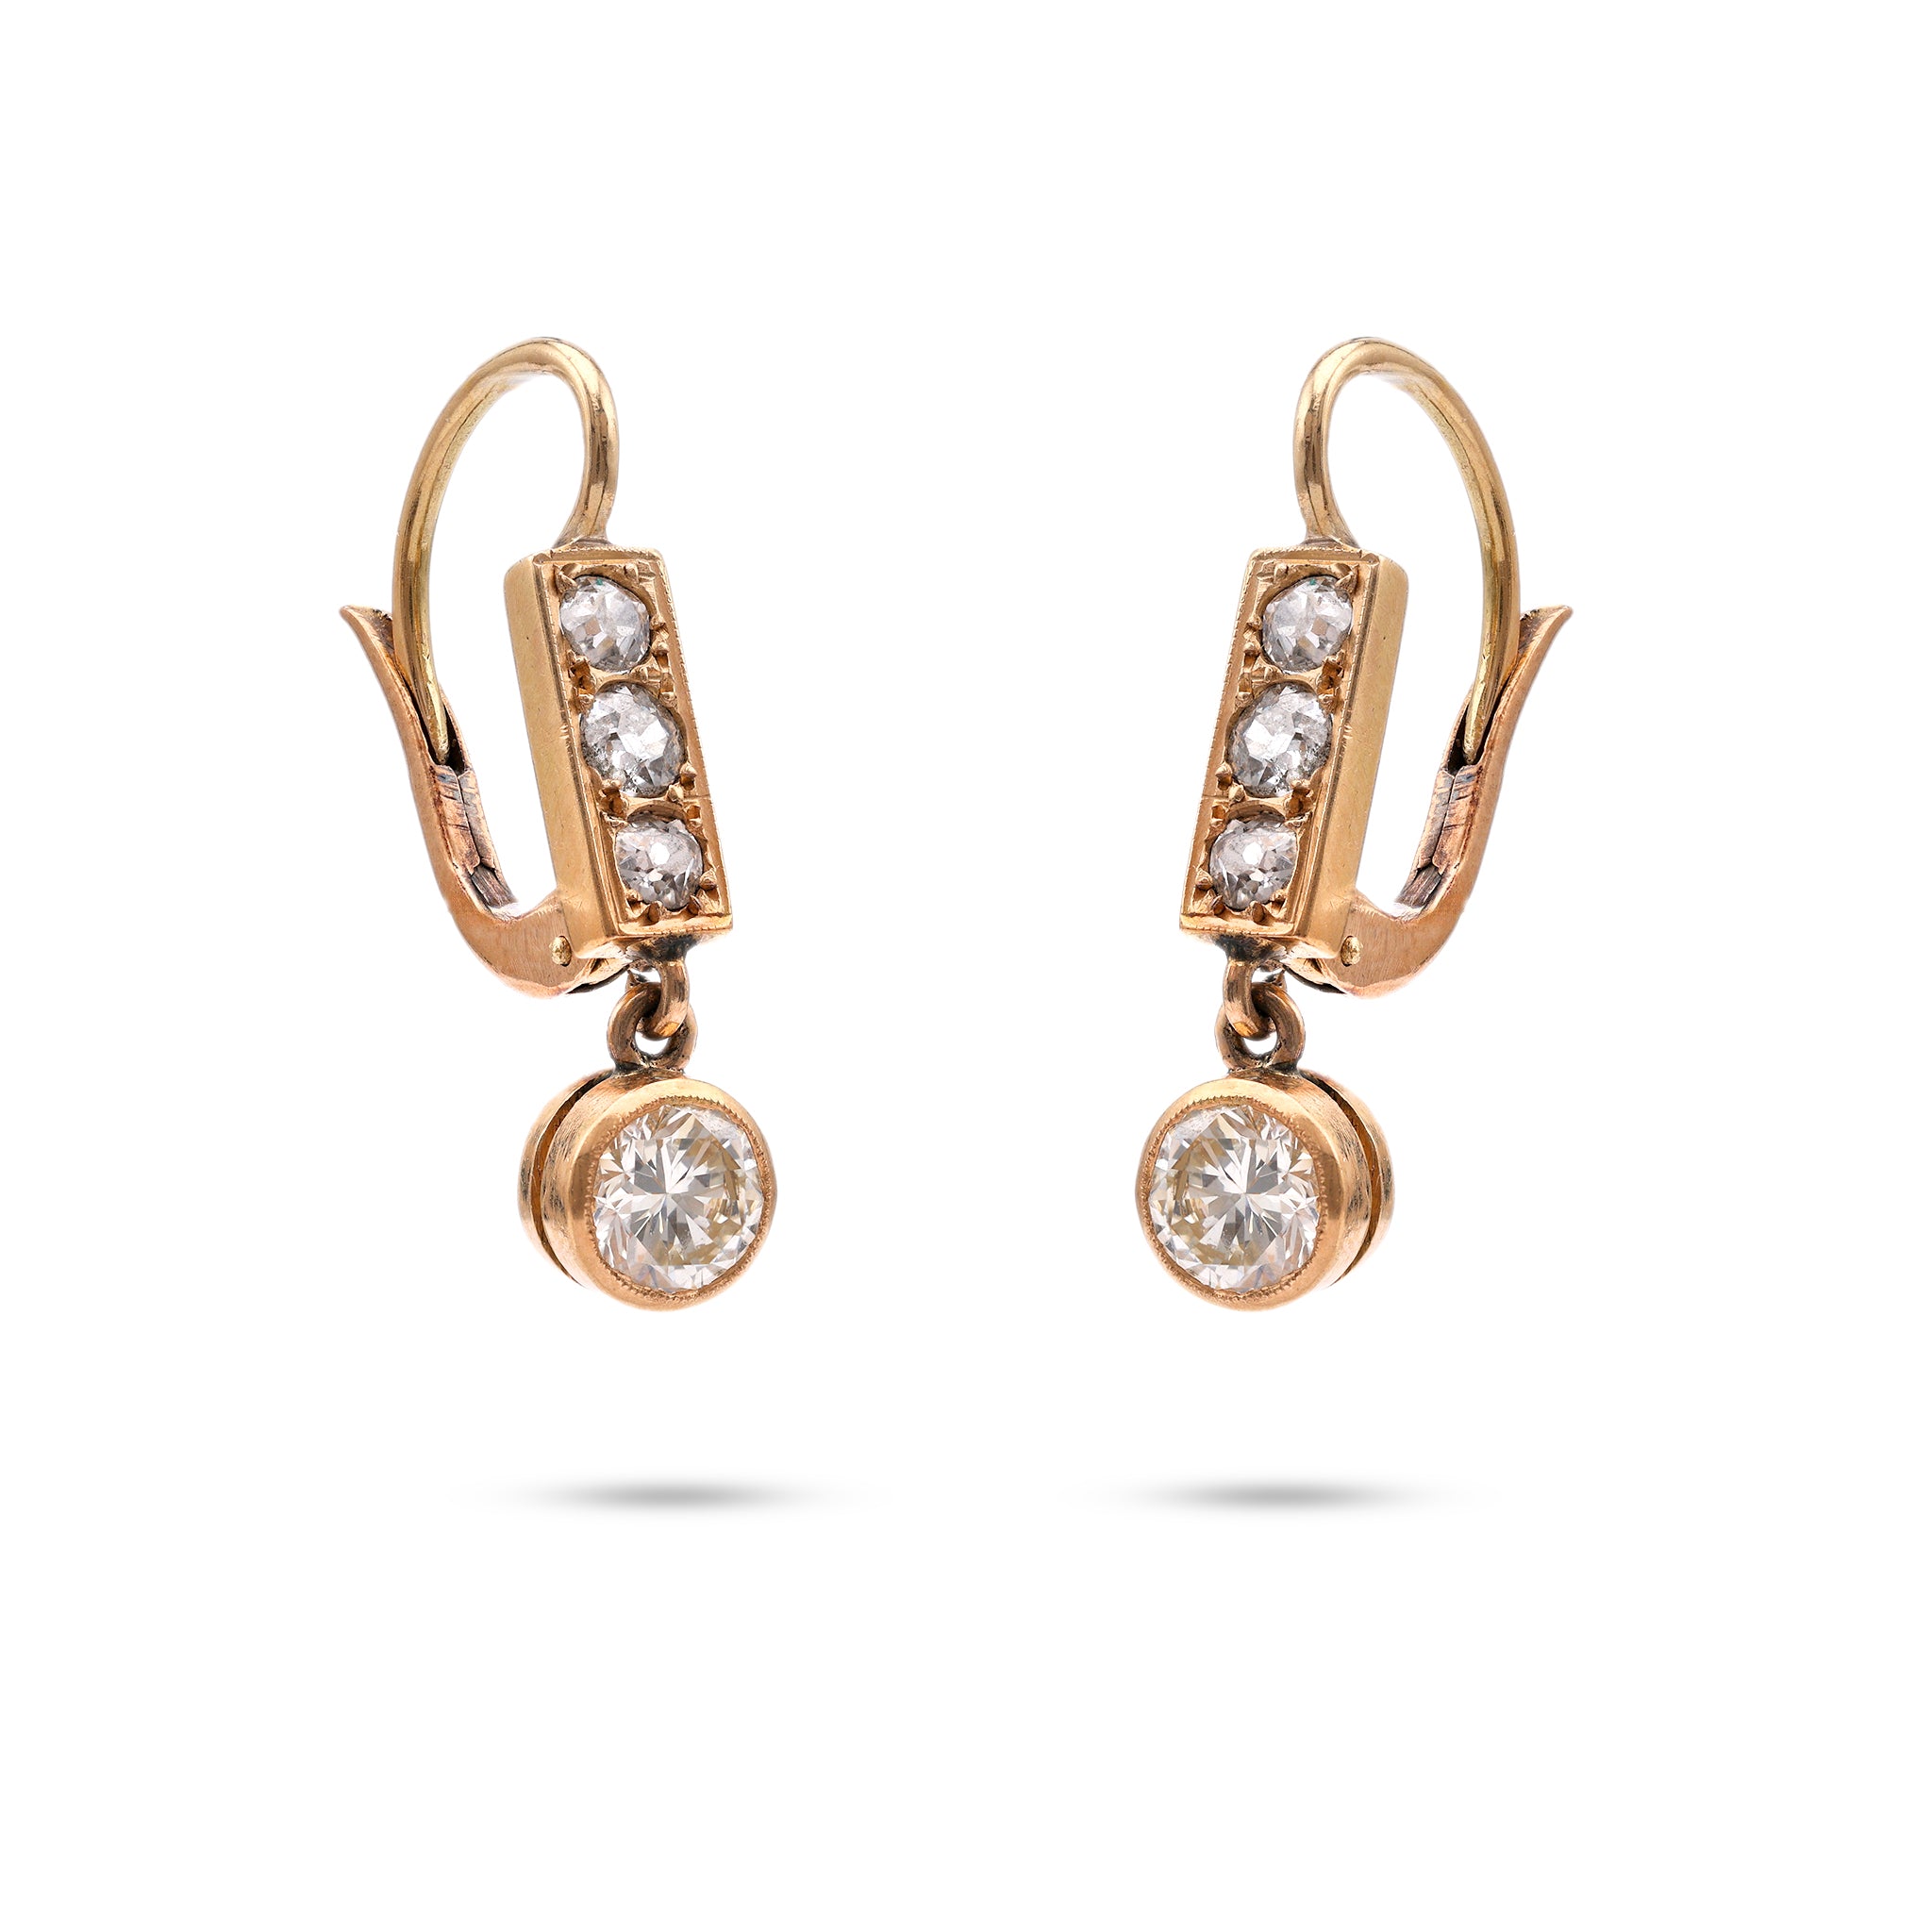 Antique Inspired Diamond 18k Yellow Gold Drop Earrings Earrings Jack Weir & Sons   